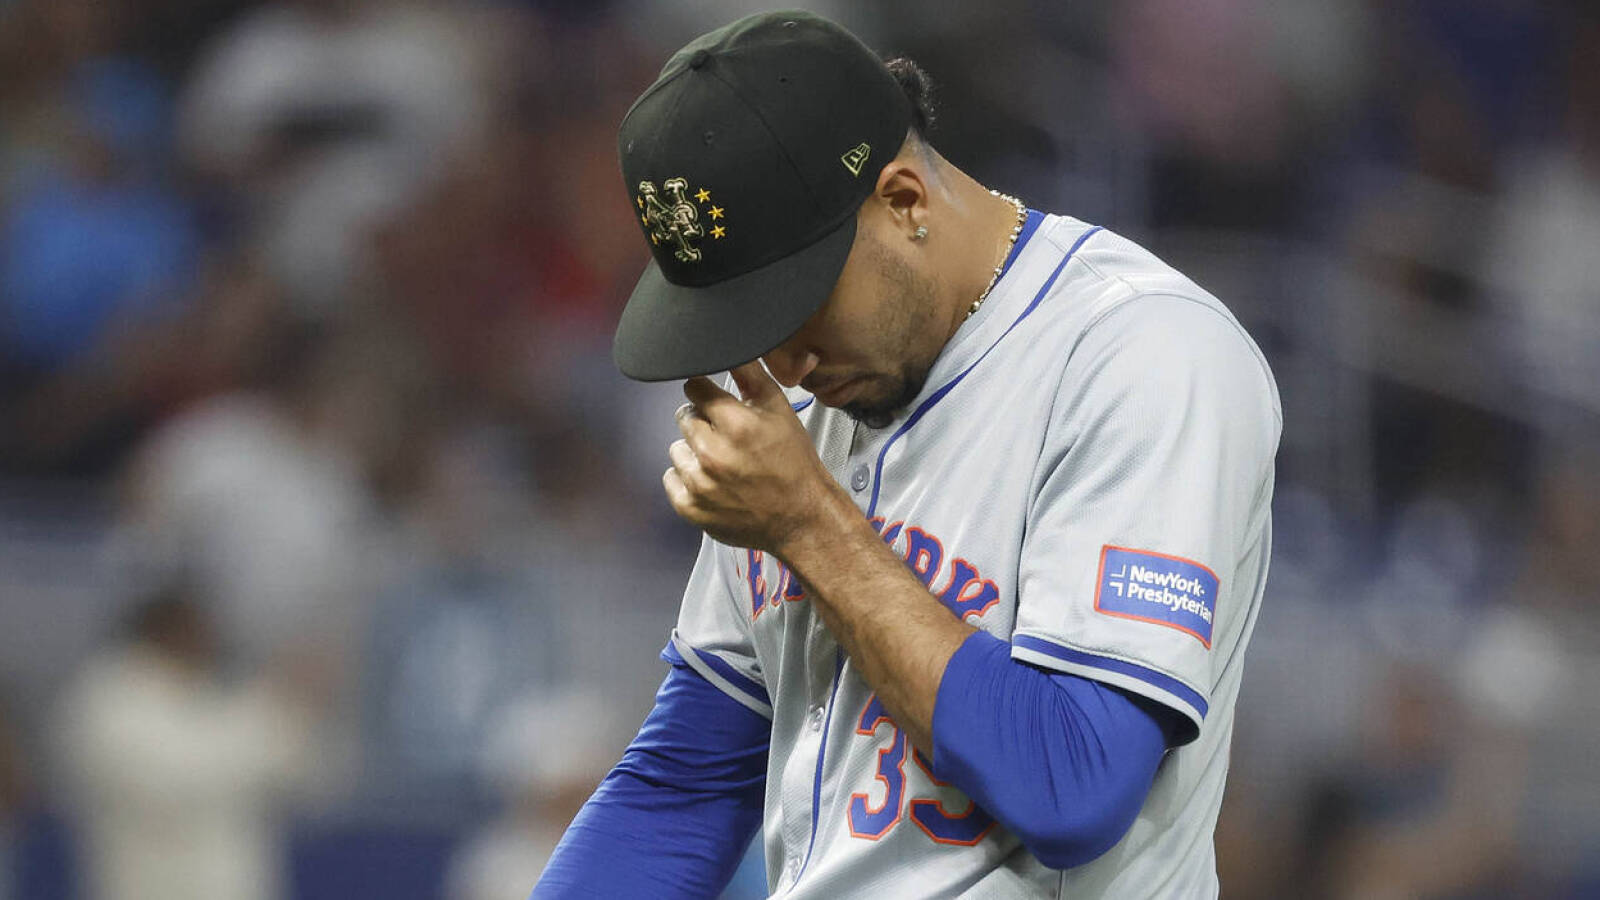 Mets' Edwin Diaz addresses status after latest meltdown